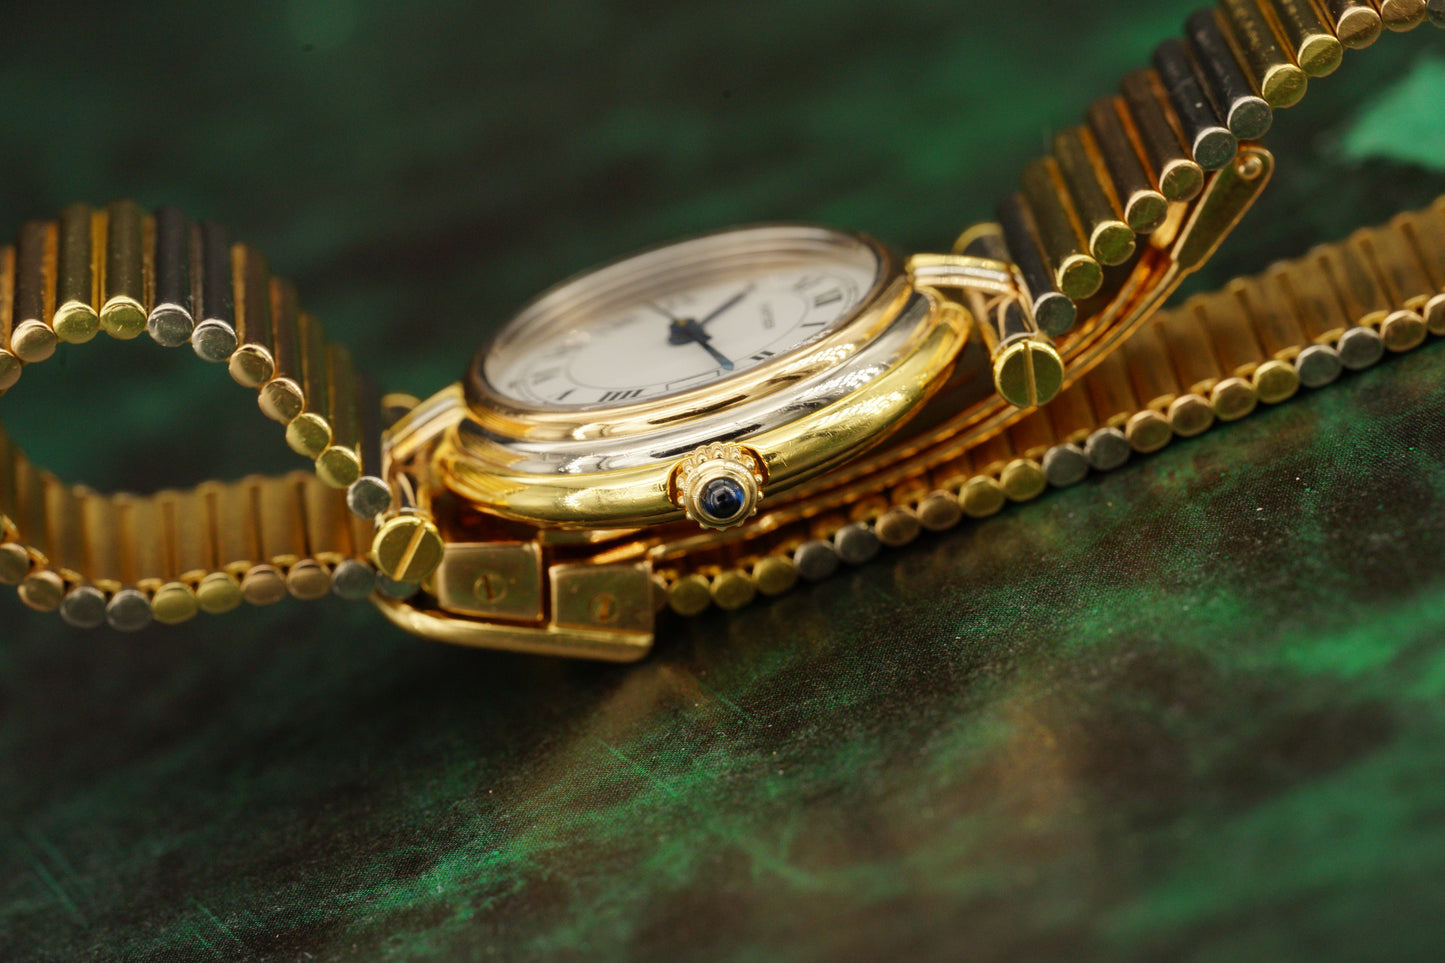 Cartier Lady VENDOME Date | Trinity | Tricolor | with Gold Bracelet